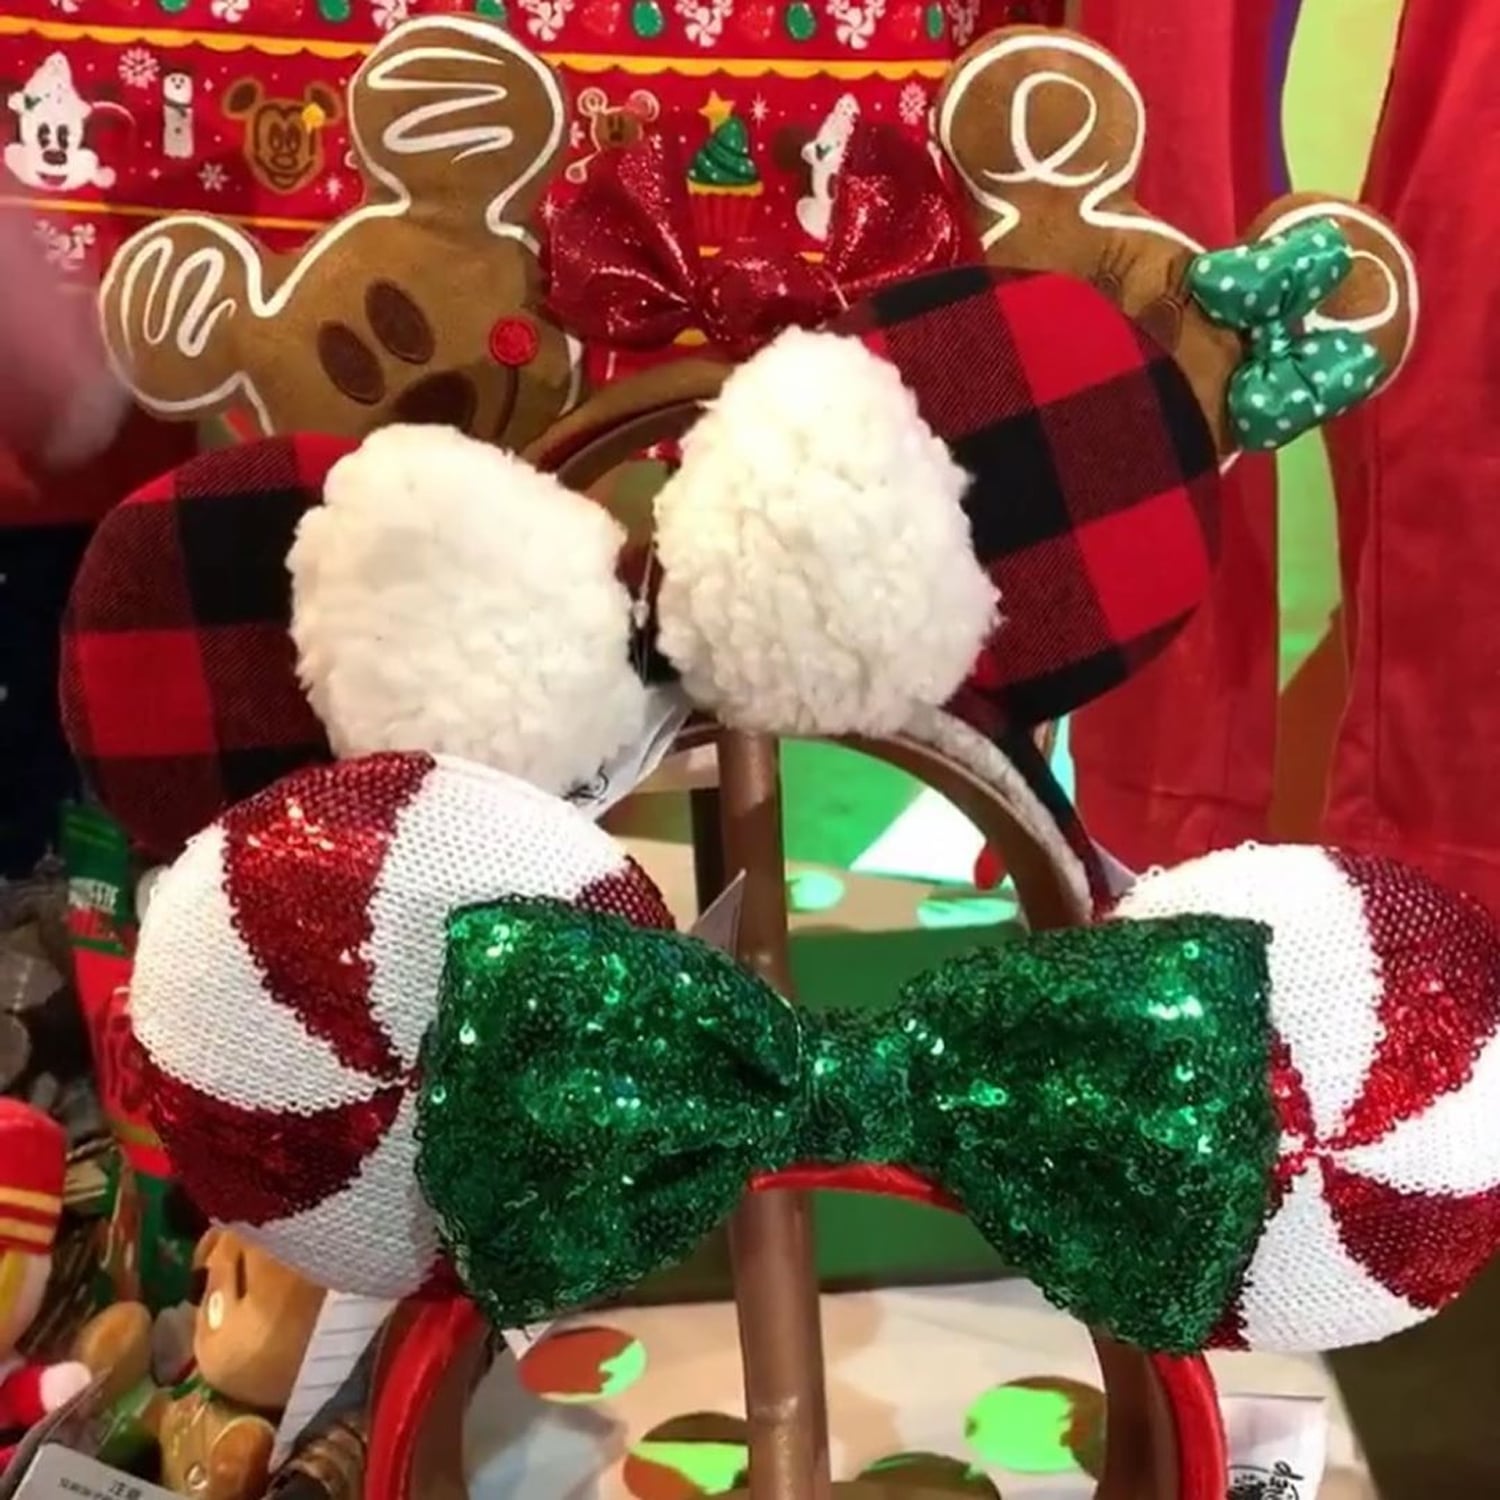 Disney Christmas Minnie Mouse Ears 2019 | POPSUGAR Smart Living